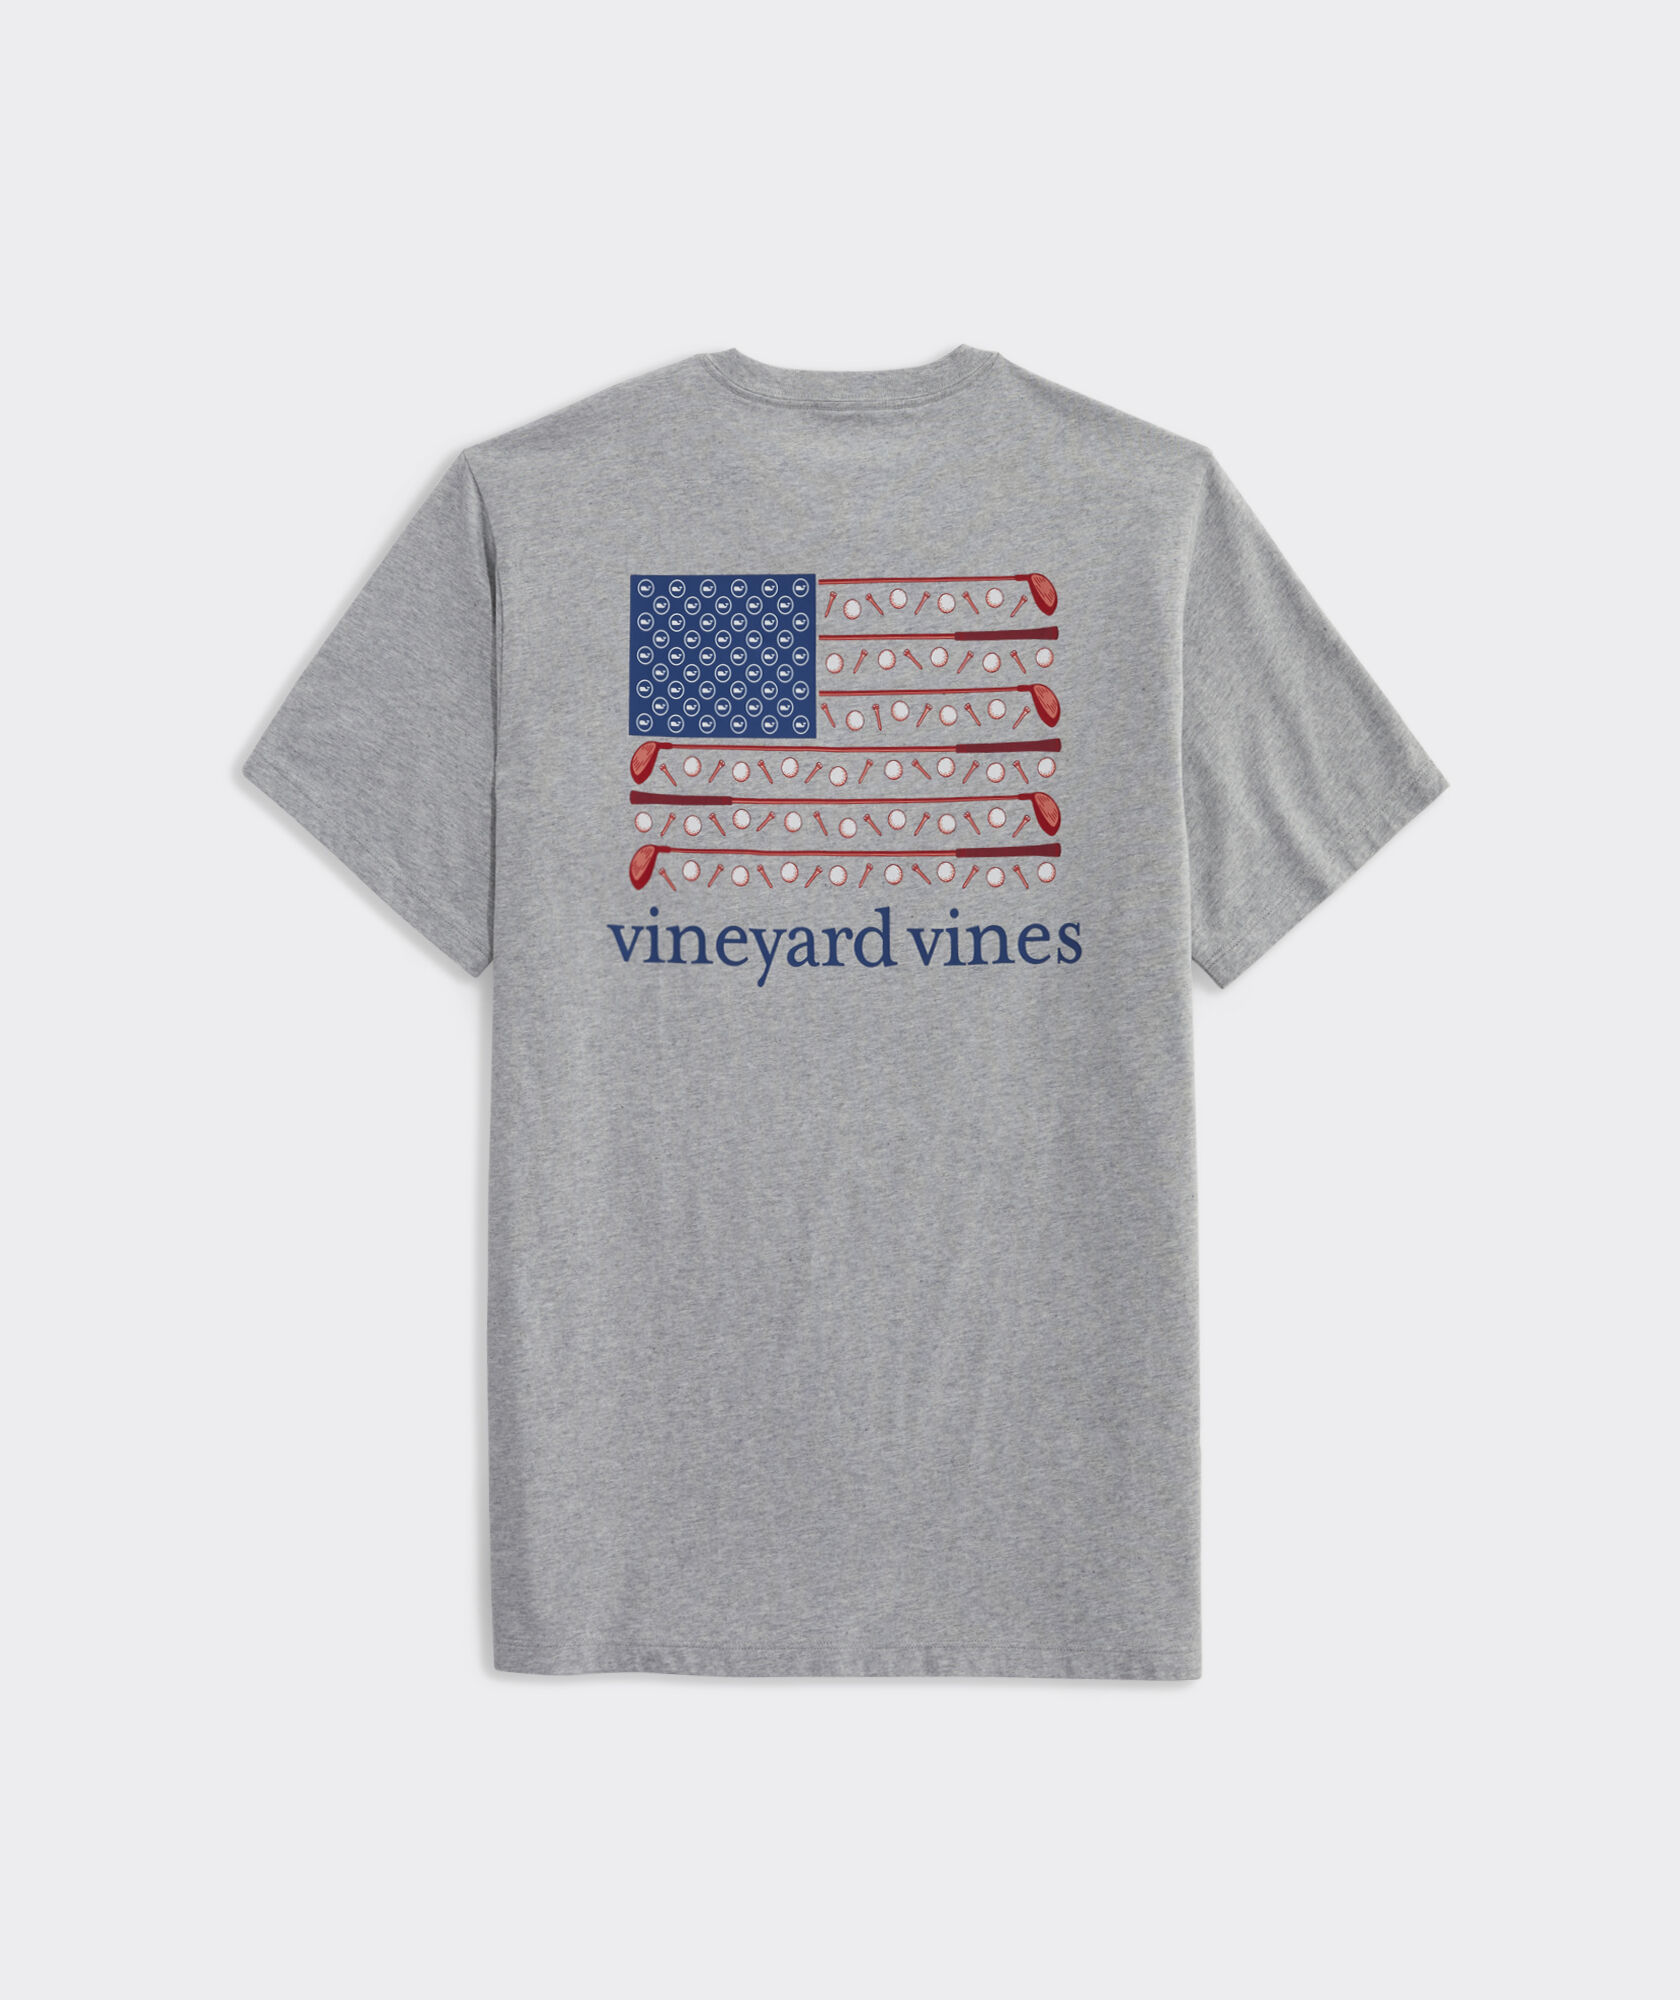 $29.50 Vineyard Vines Short Sleeve Madras Whale T Shirt Size 4T V1A 